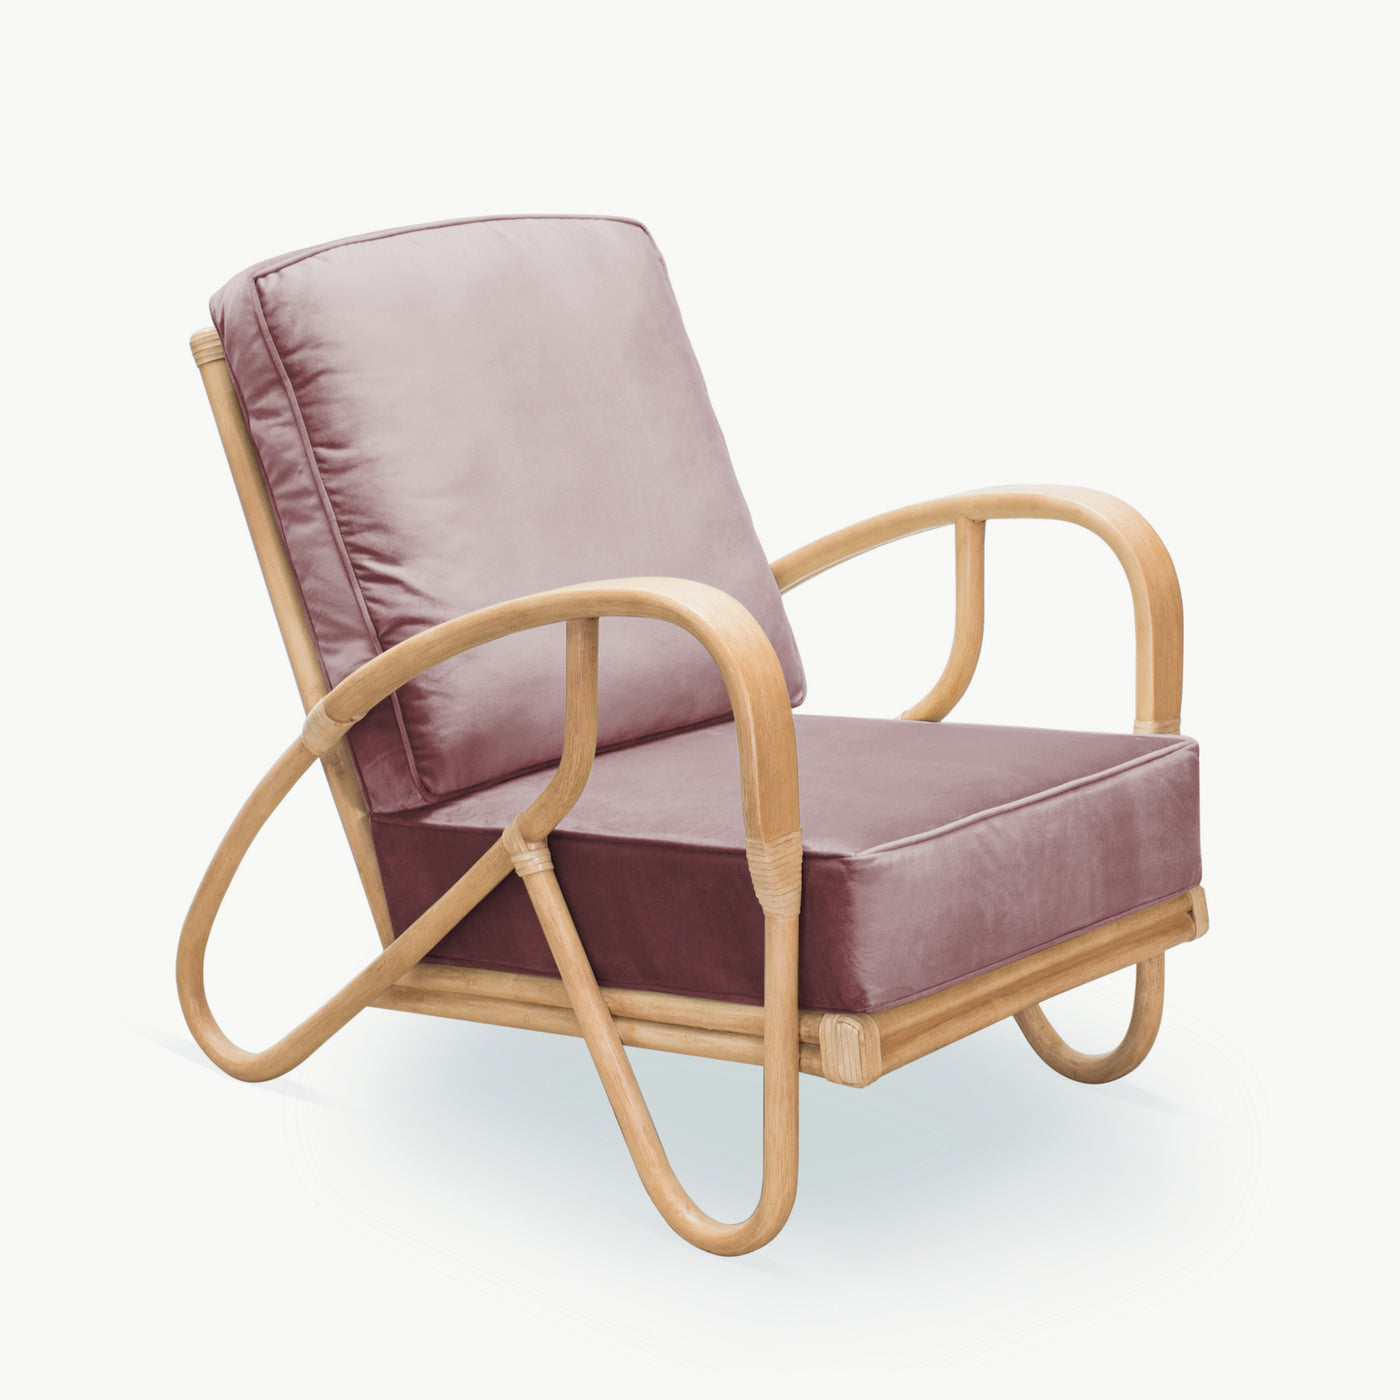 THE MAVERICK Cane Chair - Lotus